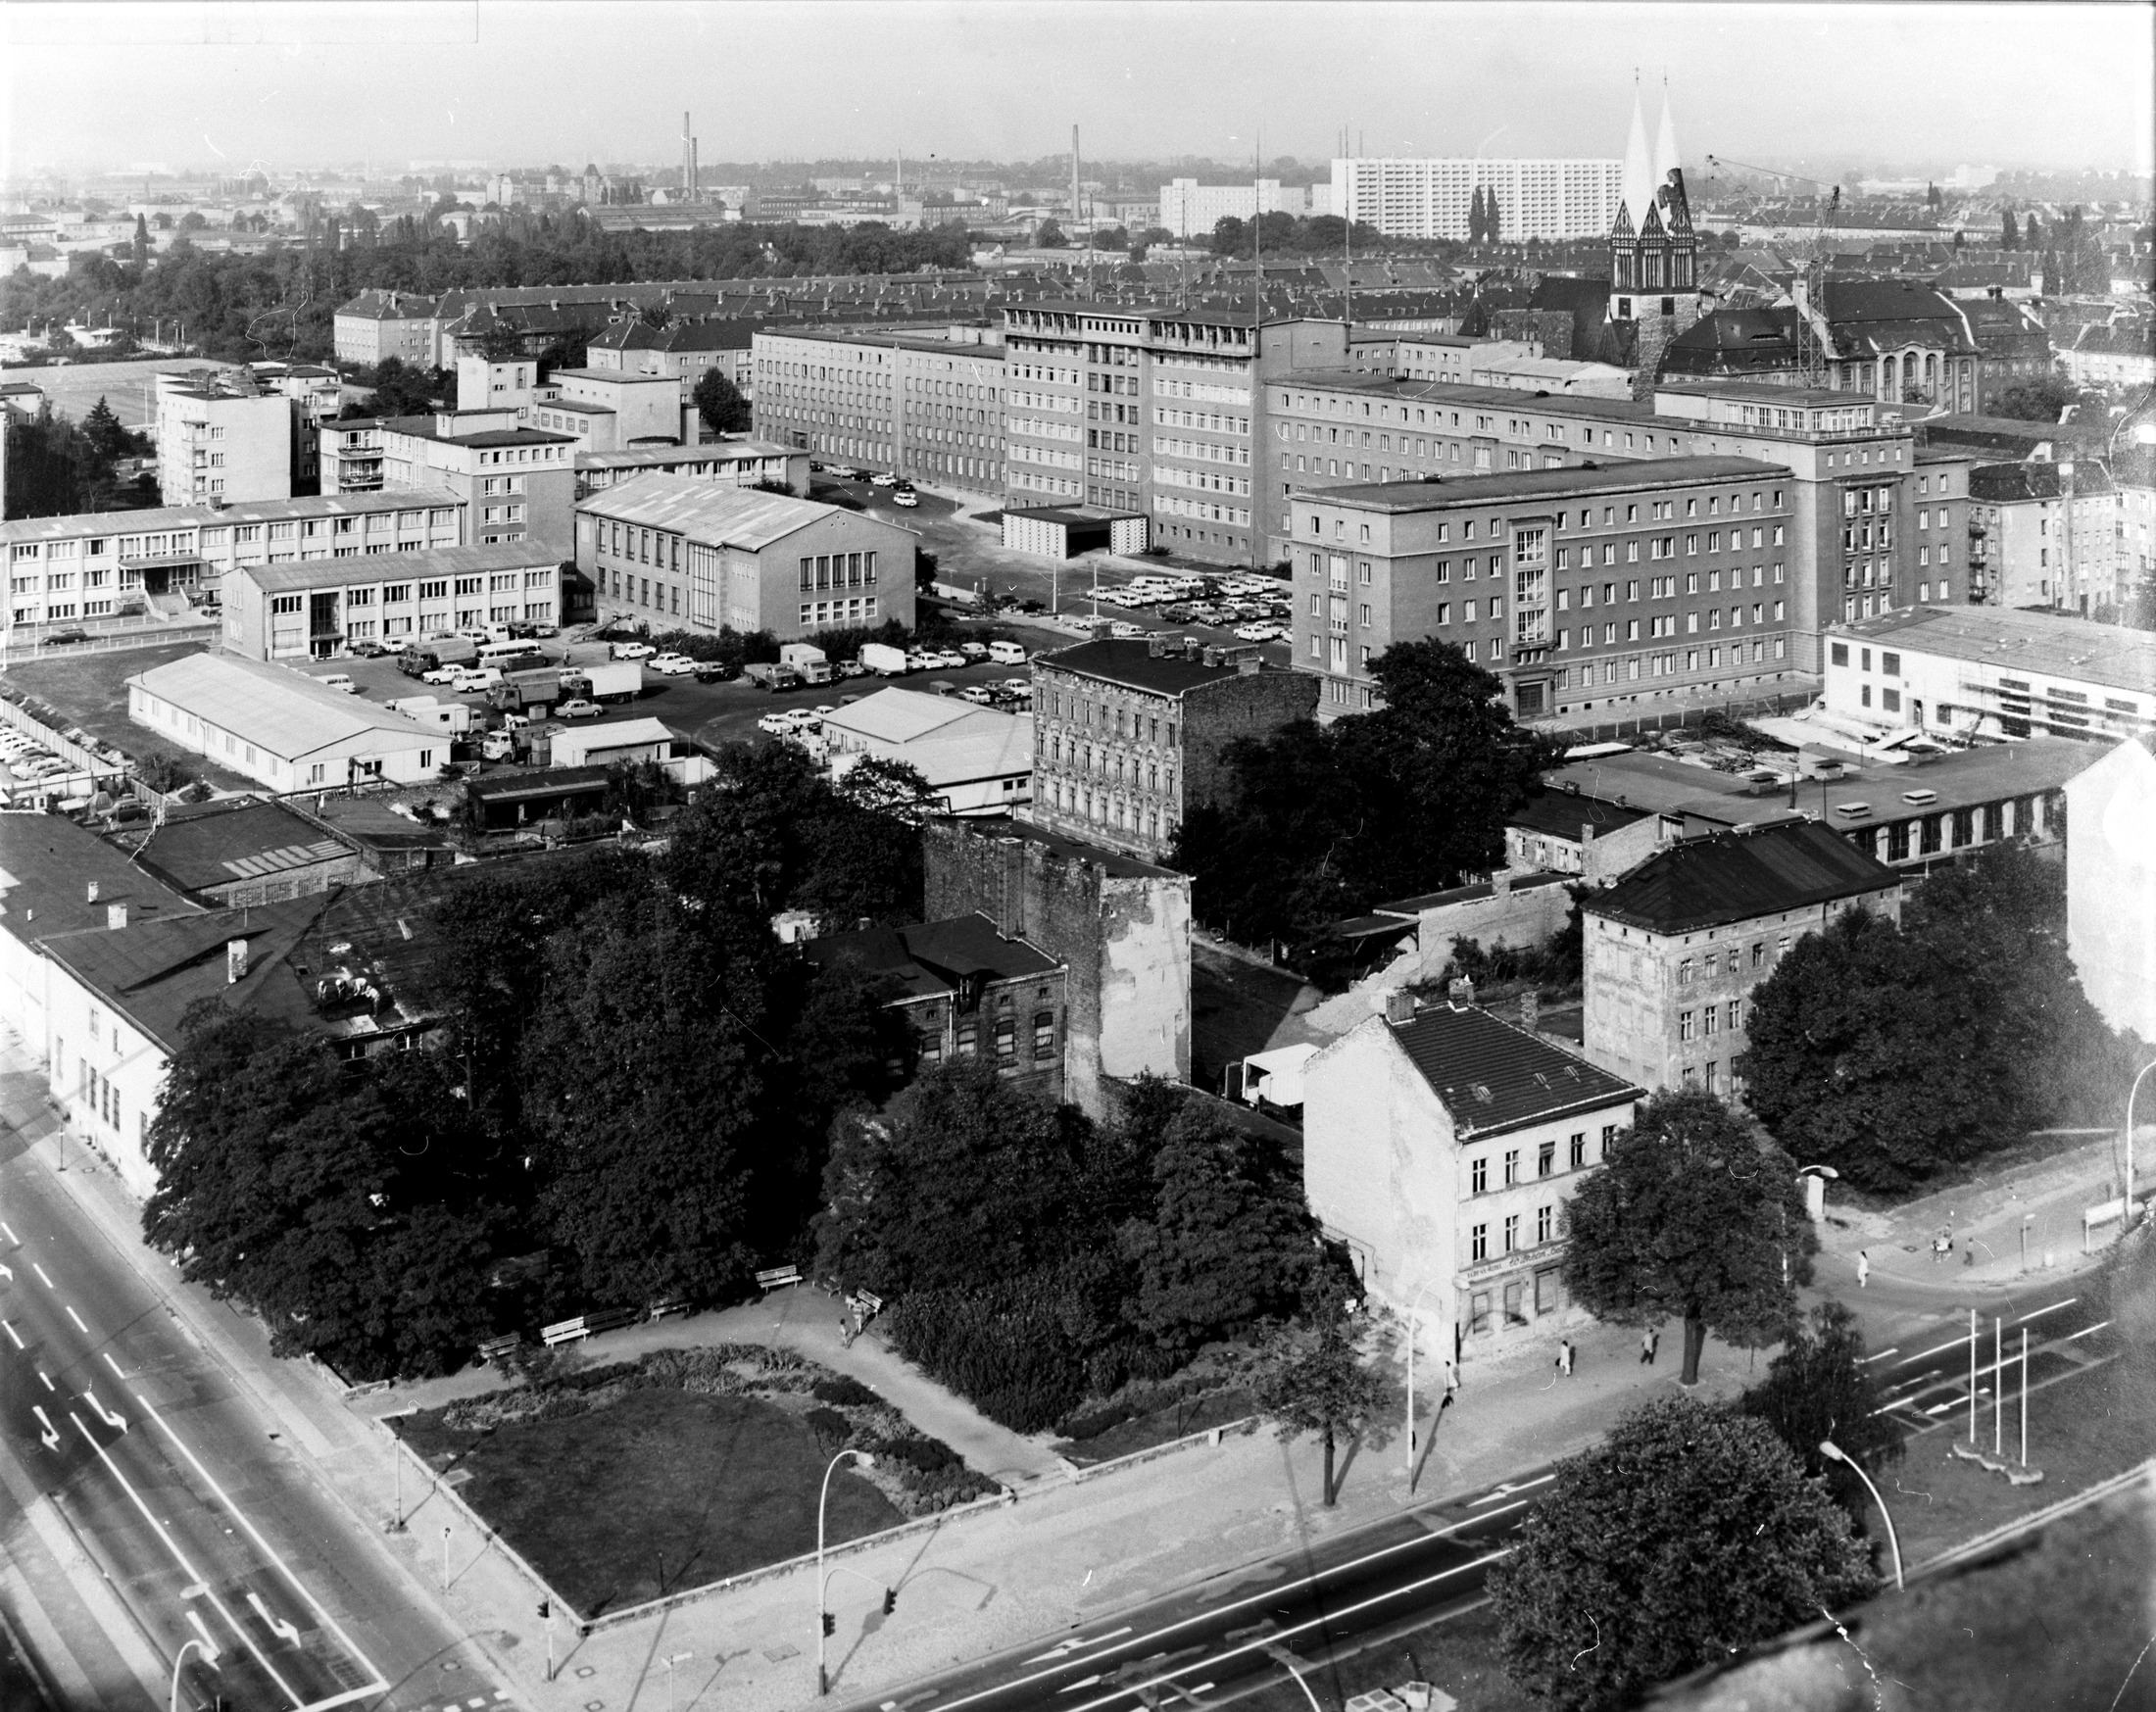 Quartier Generale Stasi anni'70 ©https://www.stasi-mediathek.de/medien/die-stasi-zentrale-in-berlin-lichtenberg-in-den-70er-jahren/blatt/26/